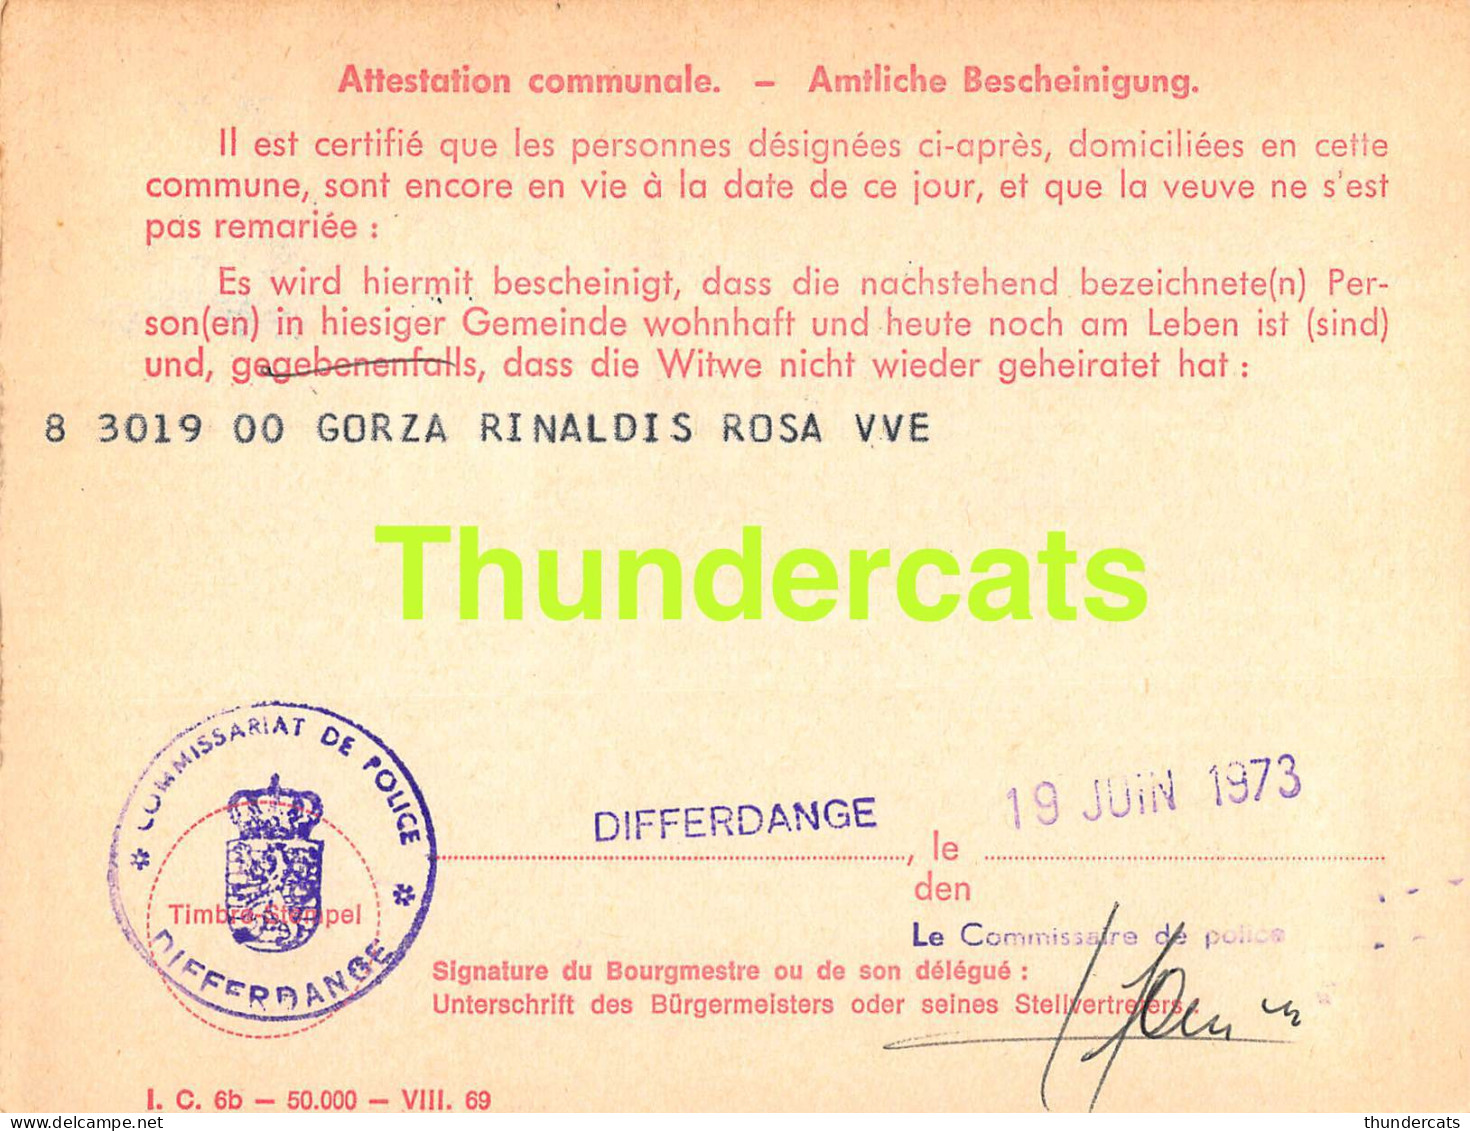 ASSURANCE VIEILLESSE INVALIDITE LUXEMBOURG 1973 GORZA RINALDIS DIFFERDANGE  - Covers & Documents